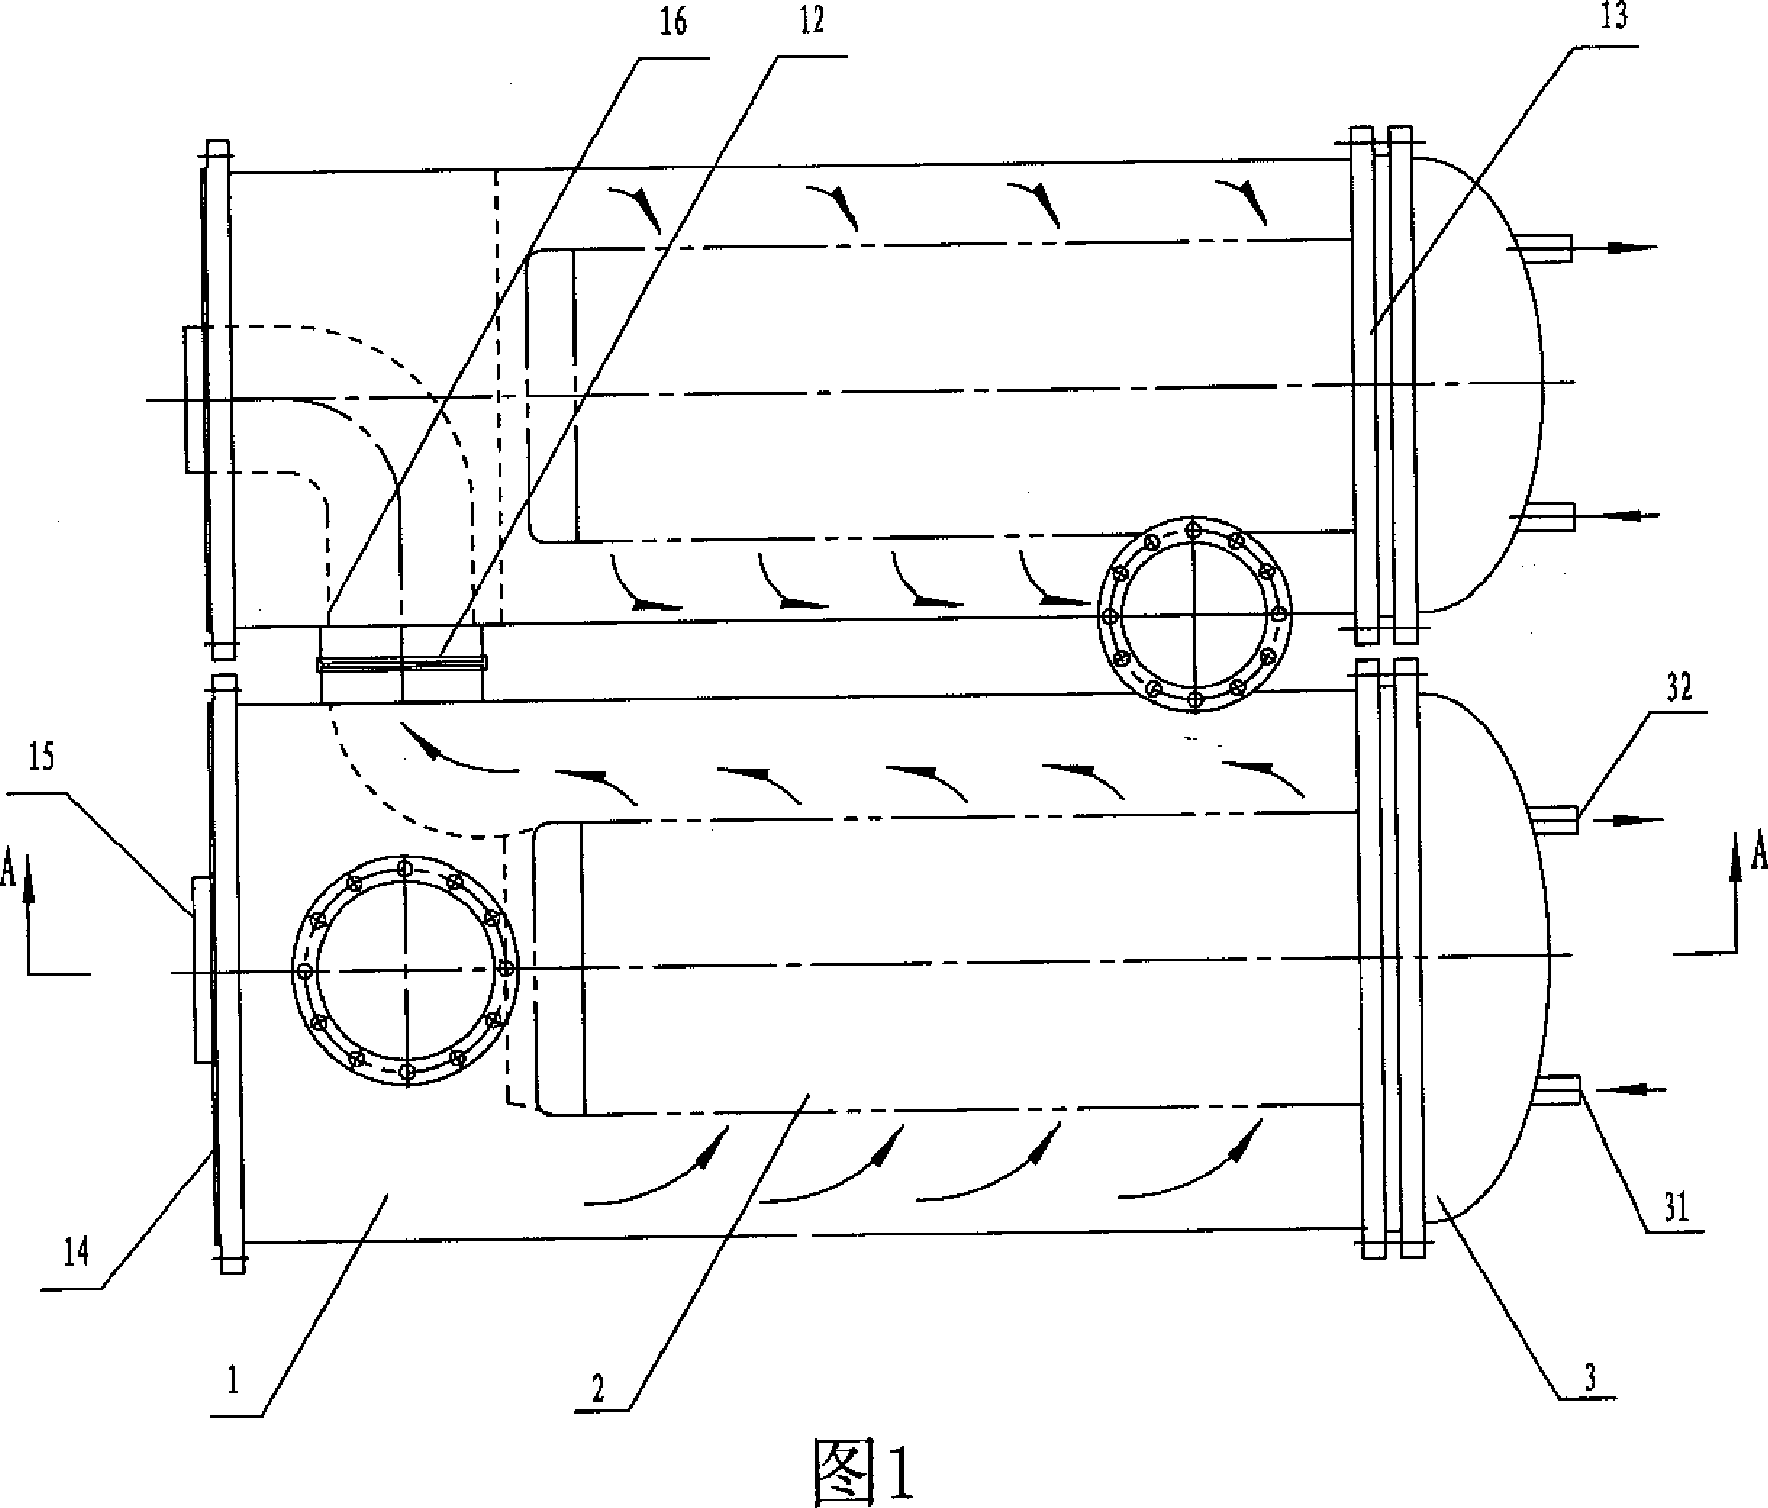 Compressor intercooling system